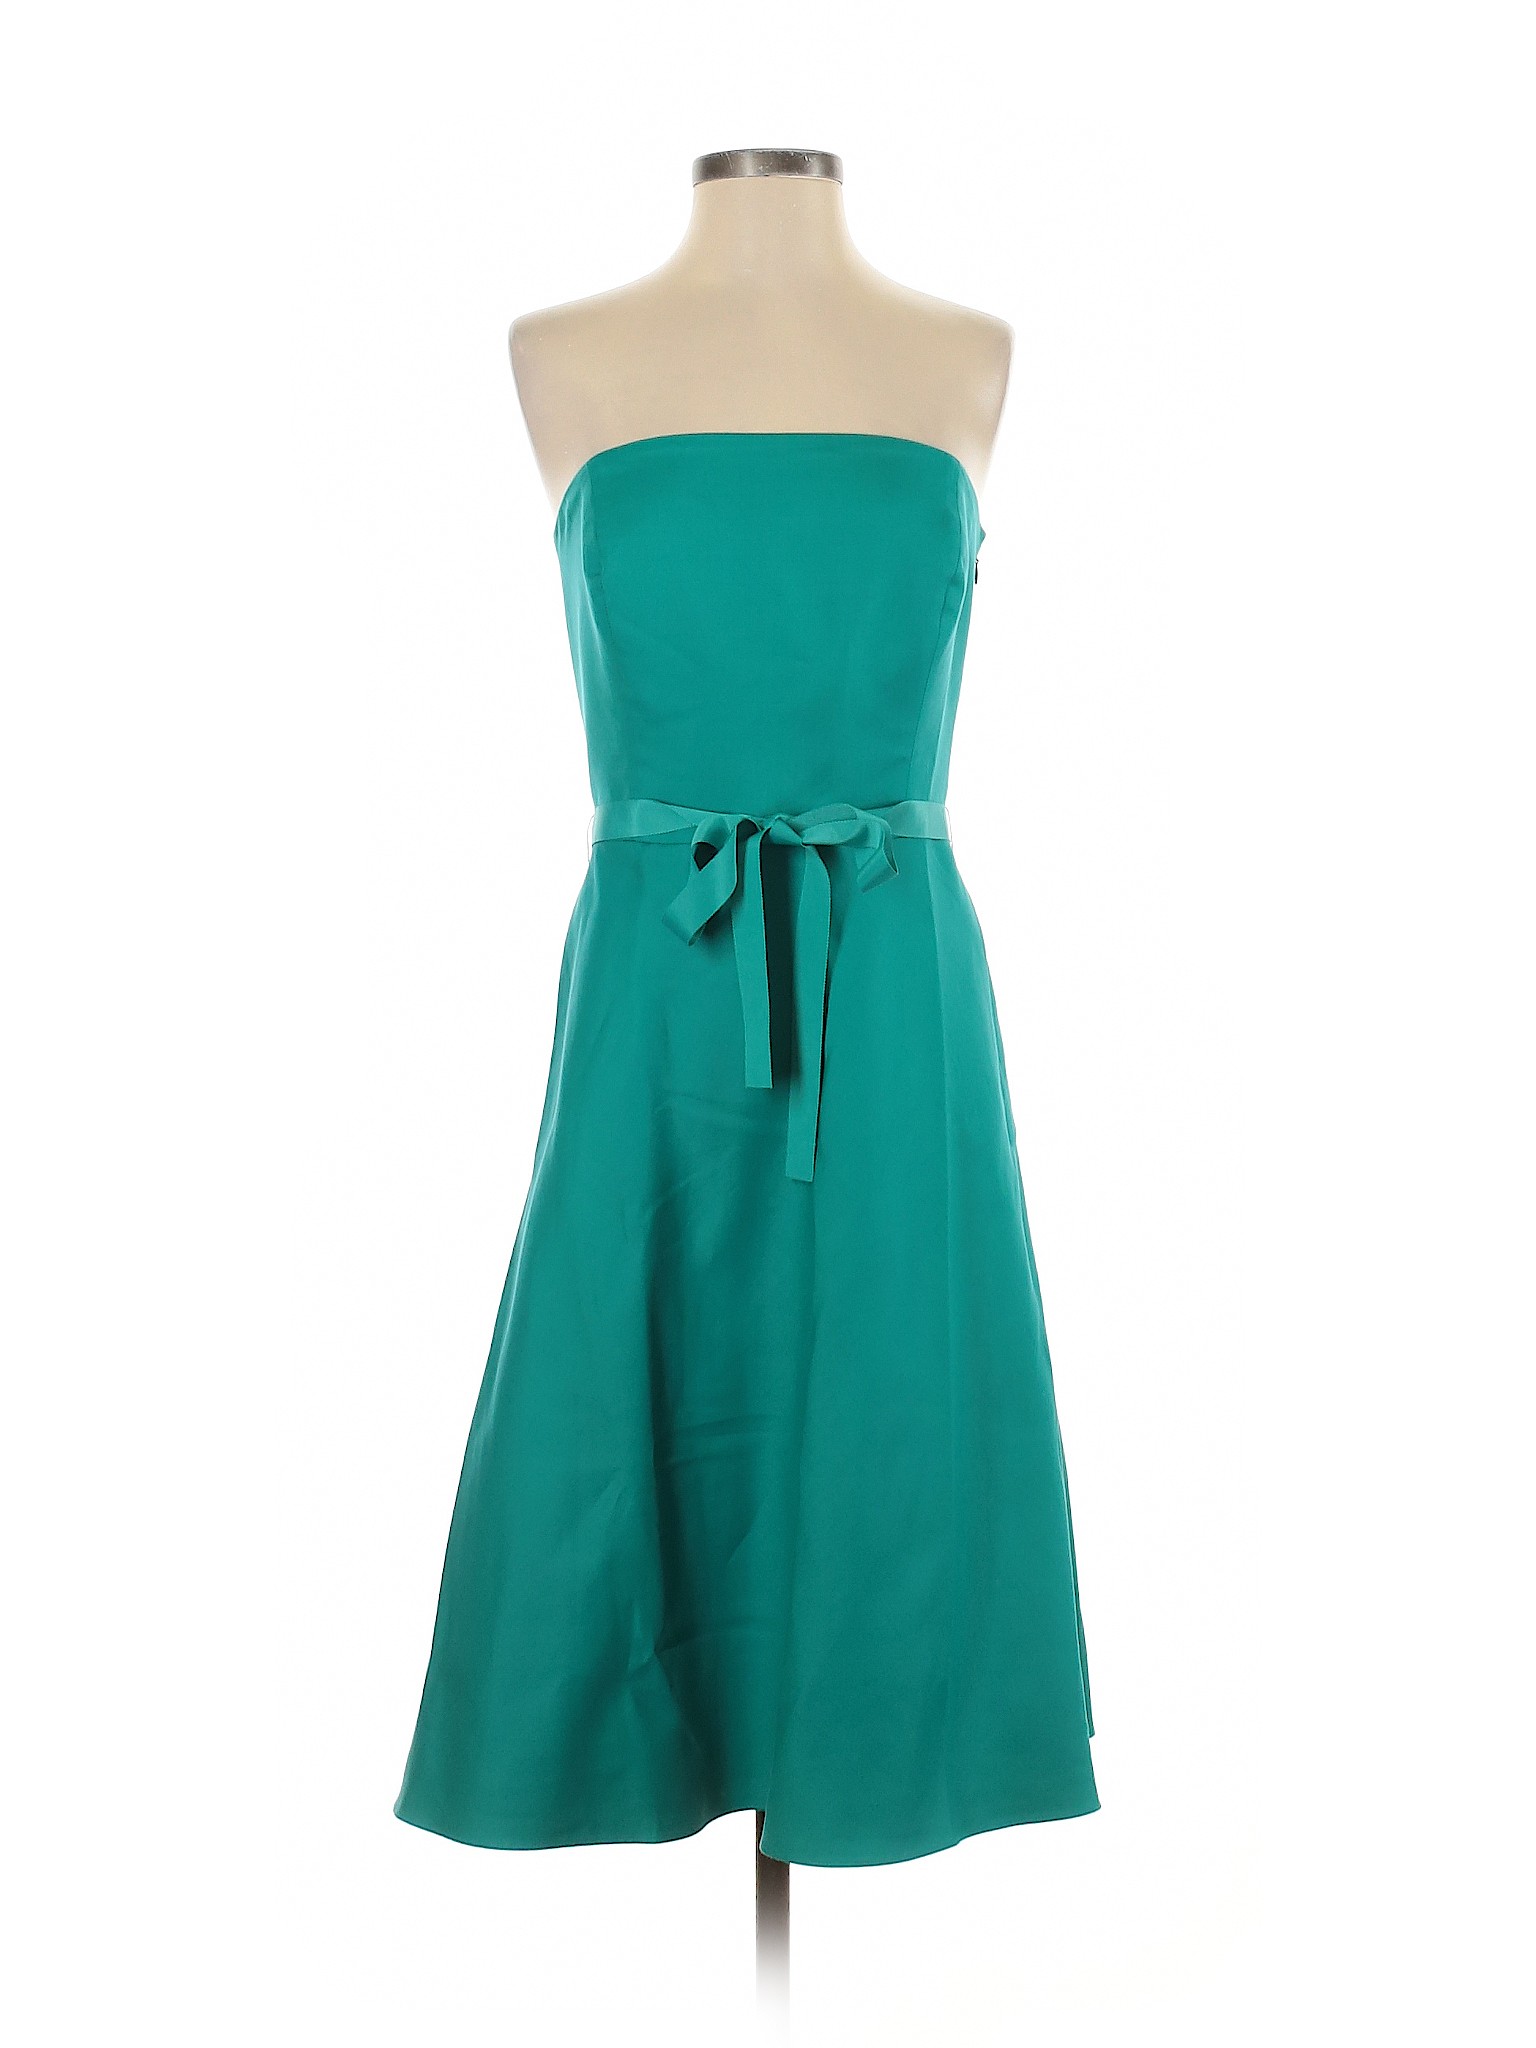 Ann Taylor Women Green Cocktail Dress 6 | eBay